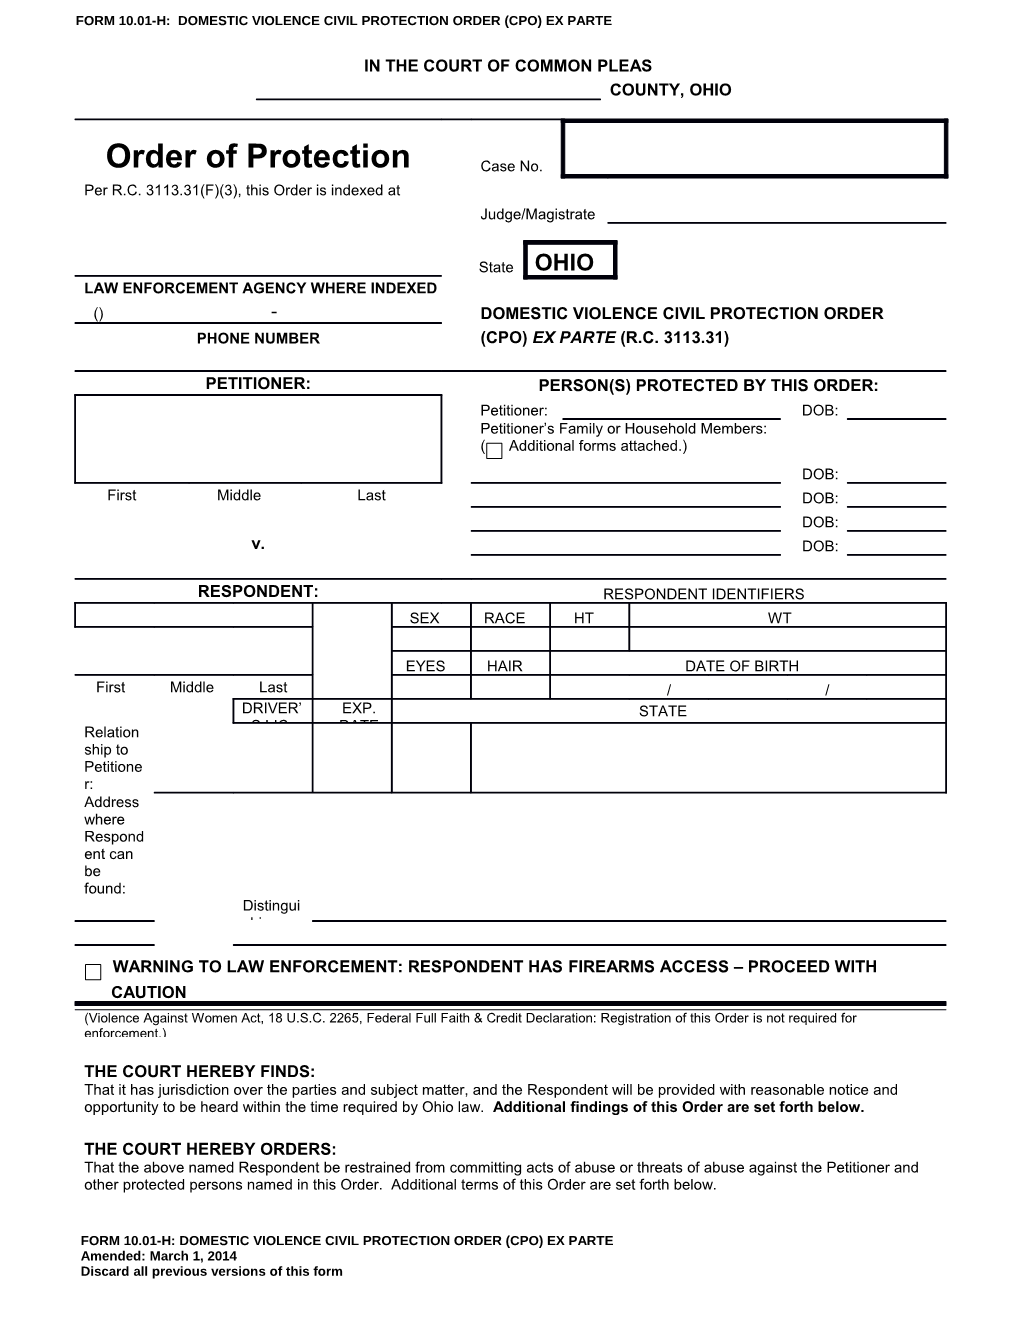 Form 10.01-H: Domestic Violence Civil Protection Order (Cpo) Ex Parte